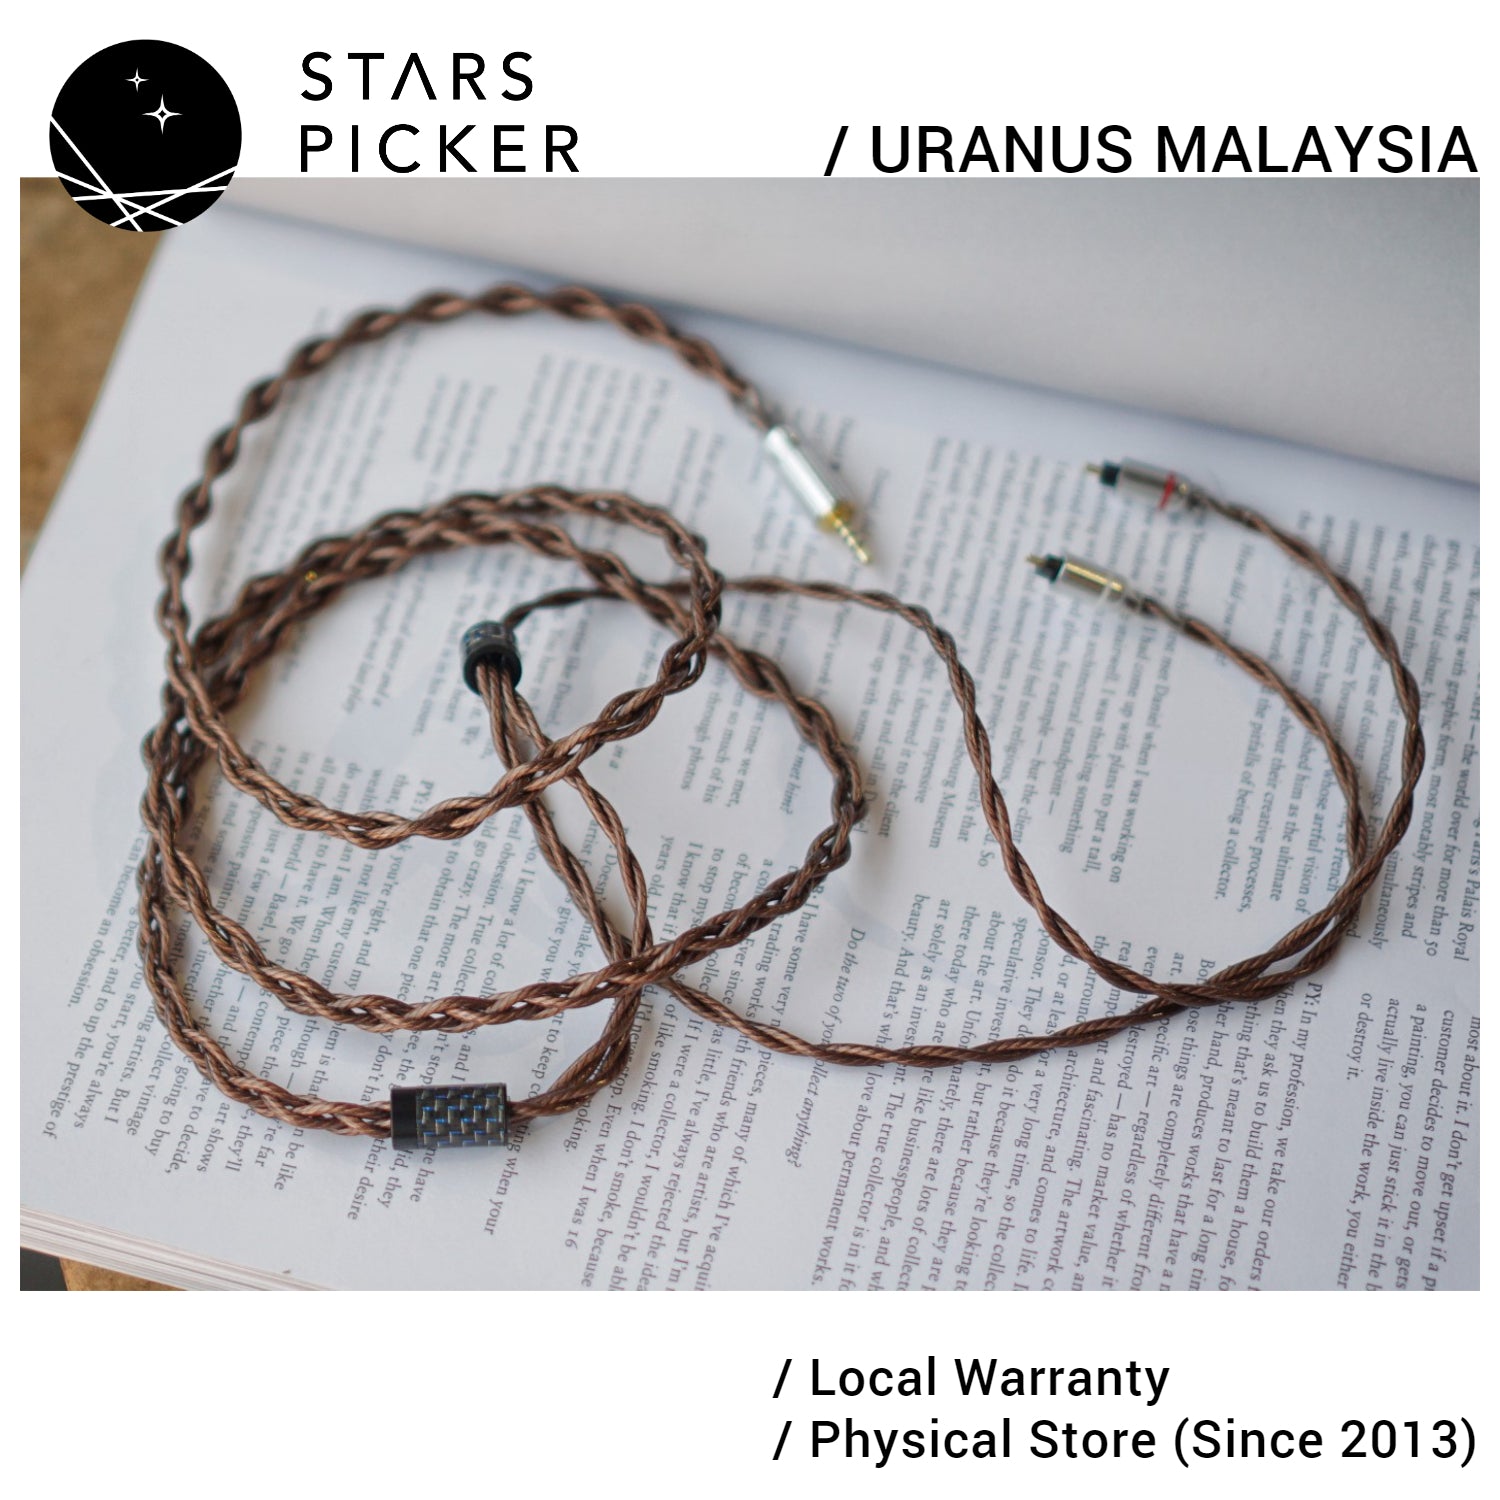 Uranus IEM-4160 GOCC Copper (1.2m) IEM Earphone Upgrade Replacement Cable with Graphene Coating + Audio Note Solder